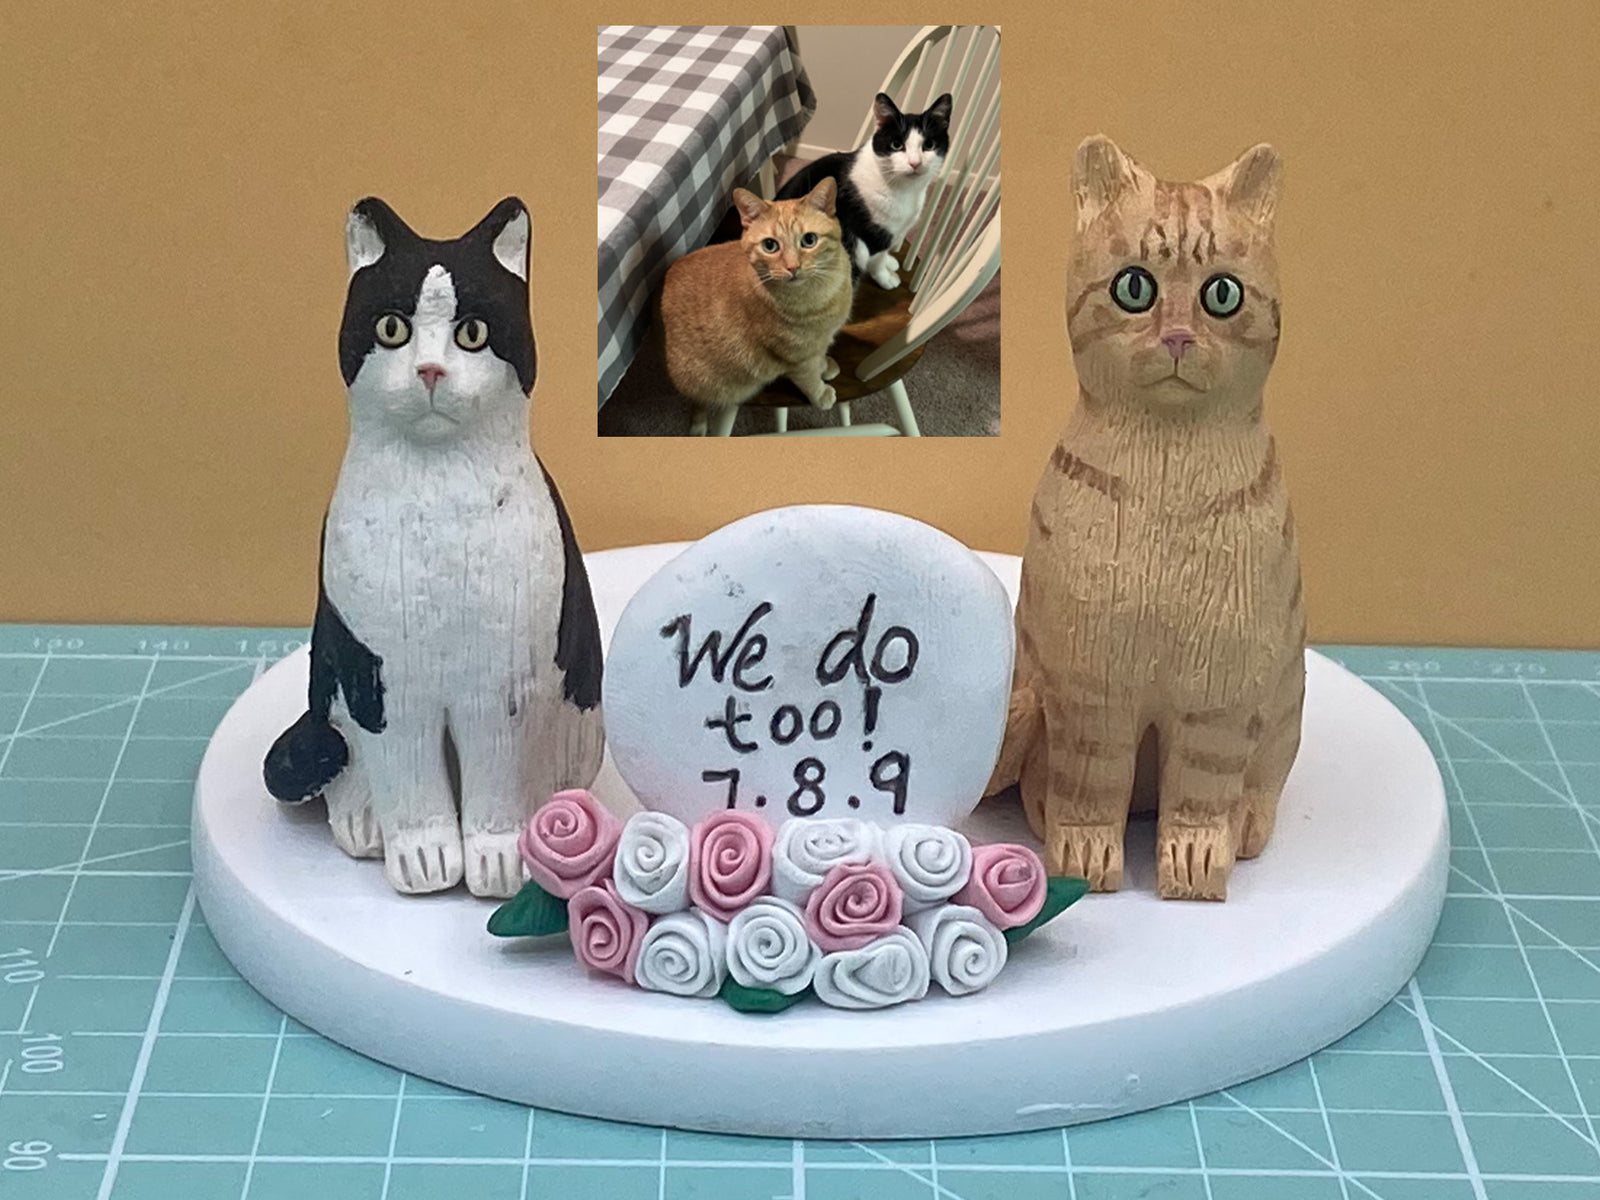 Why should I buy a custom cat figurine for my wedding cake?